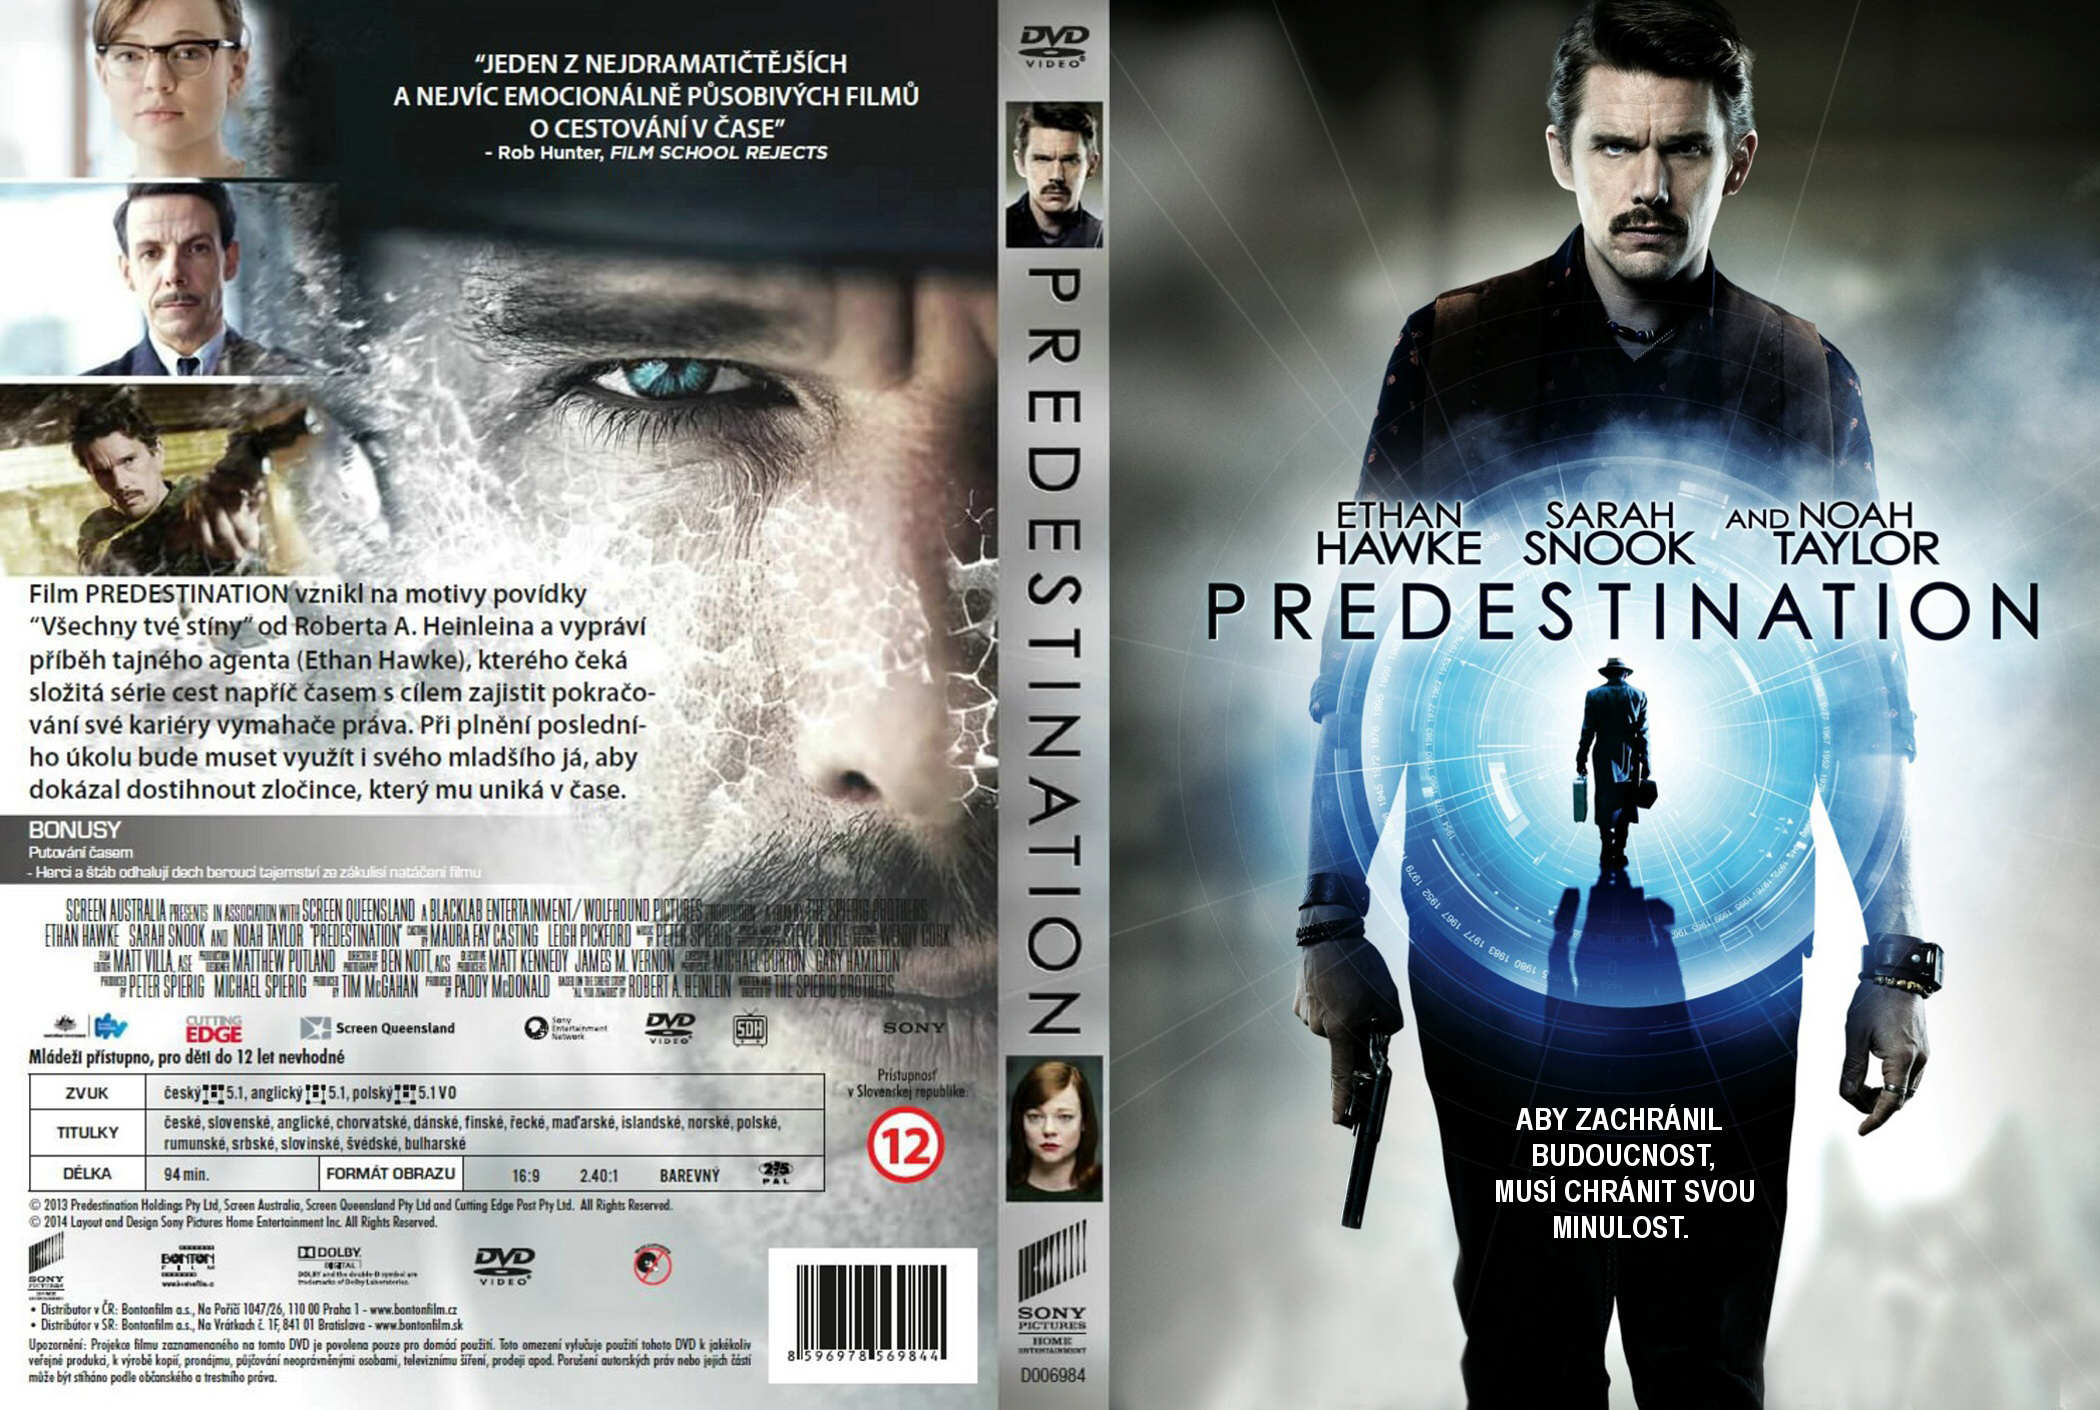 Film - Prédestination - No DVD / Boite vide / Box only !